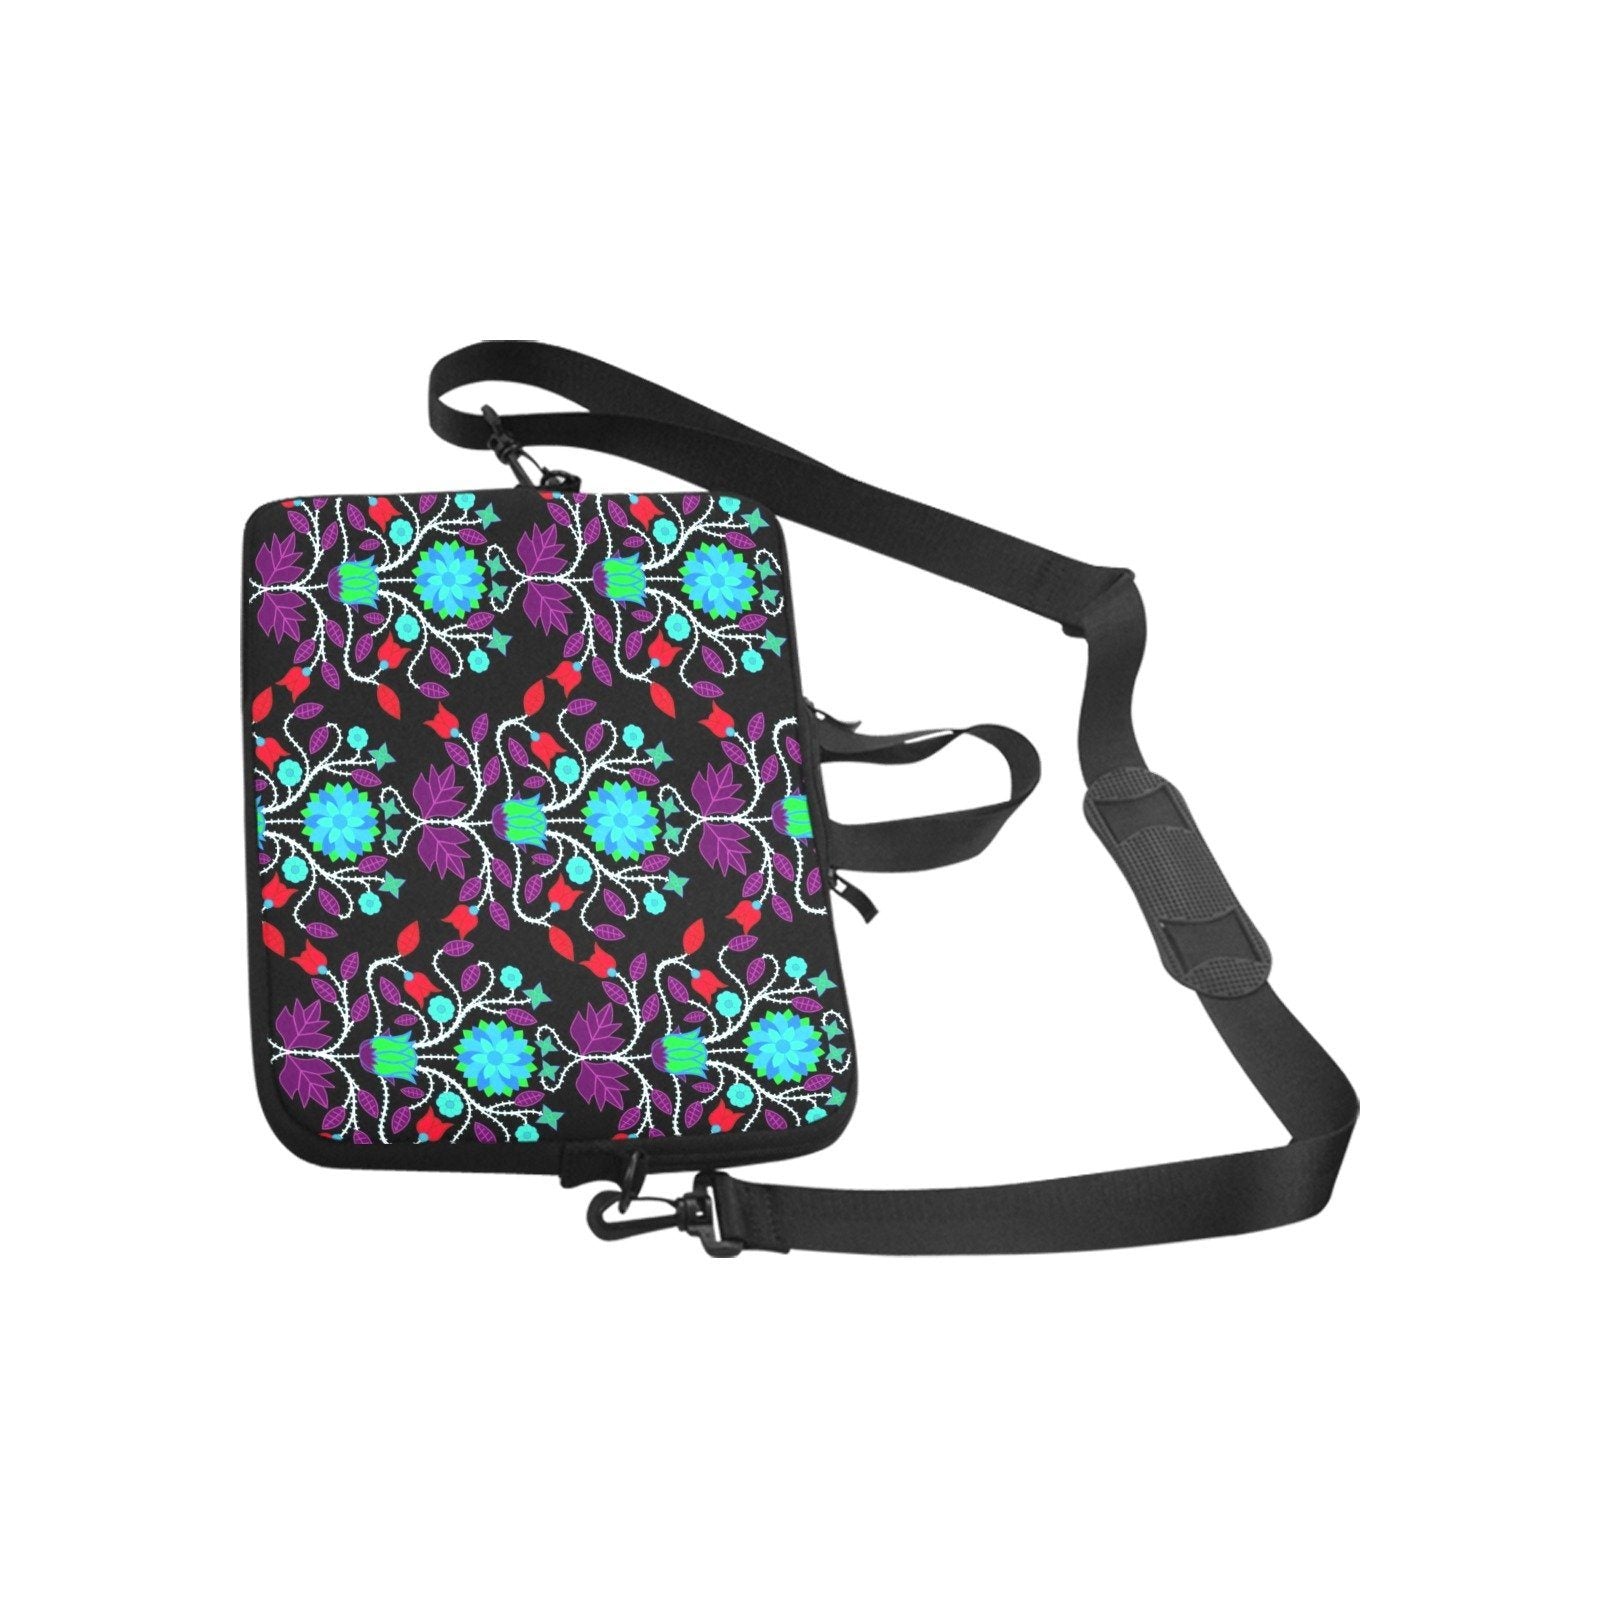 Floral Beadwork Four Clans Winter Laptop Handbags 11" bag e-joyer 